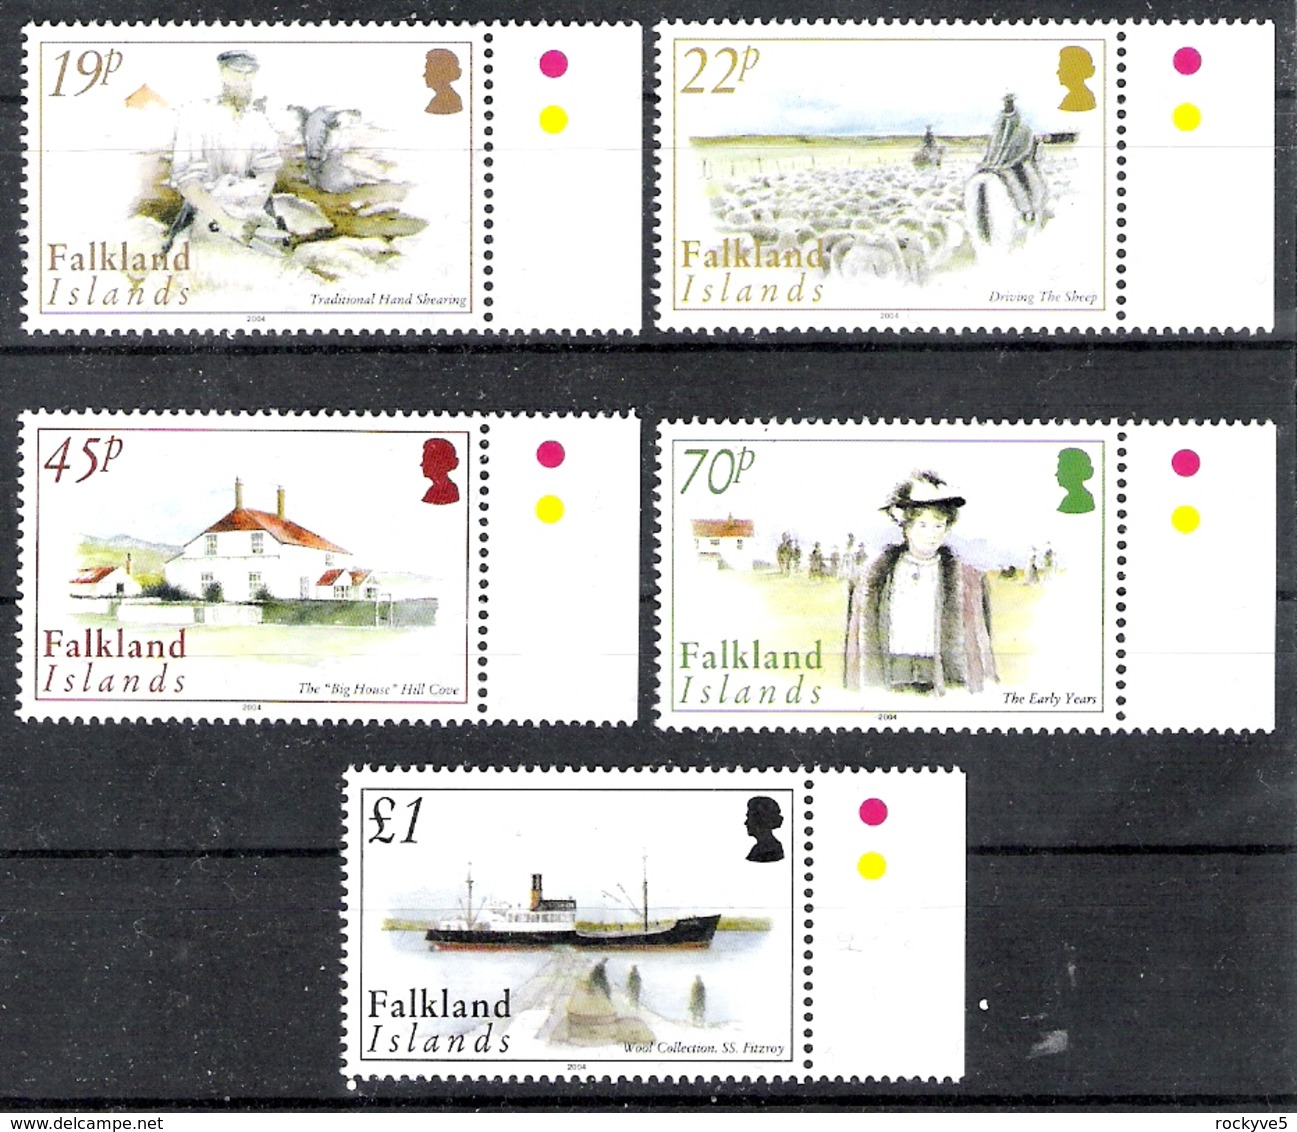 Falkland Islands 2004 History Of Sheep Farming MNH CV £16.00 - Falkland Islands